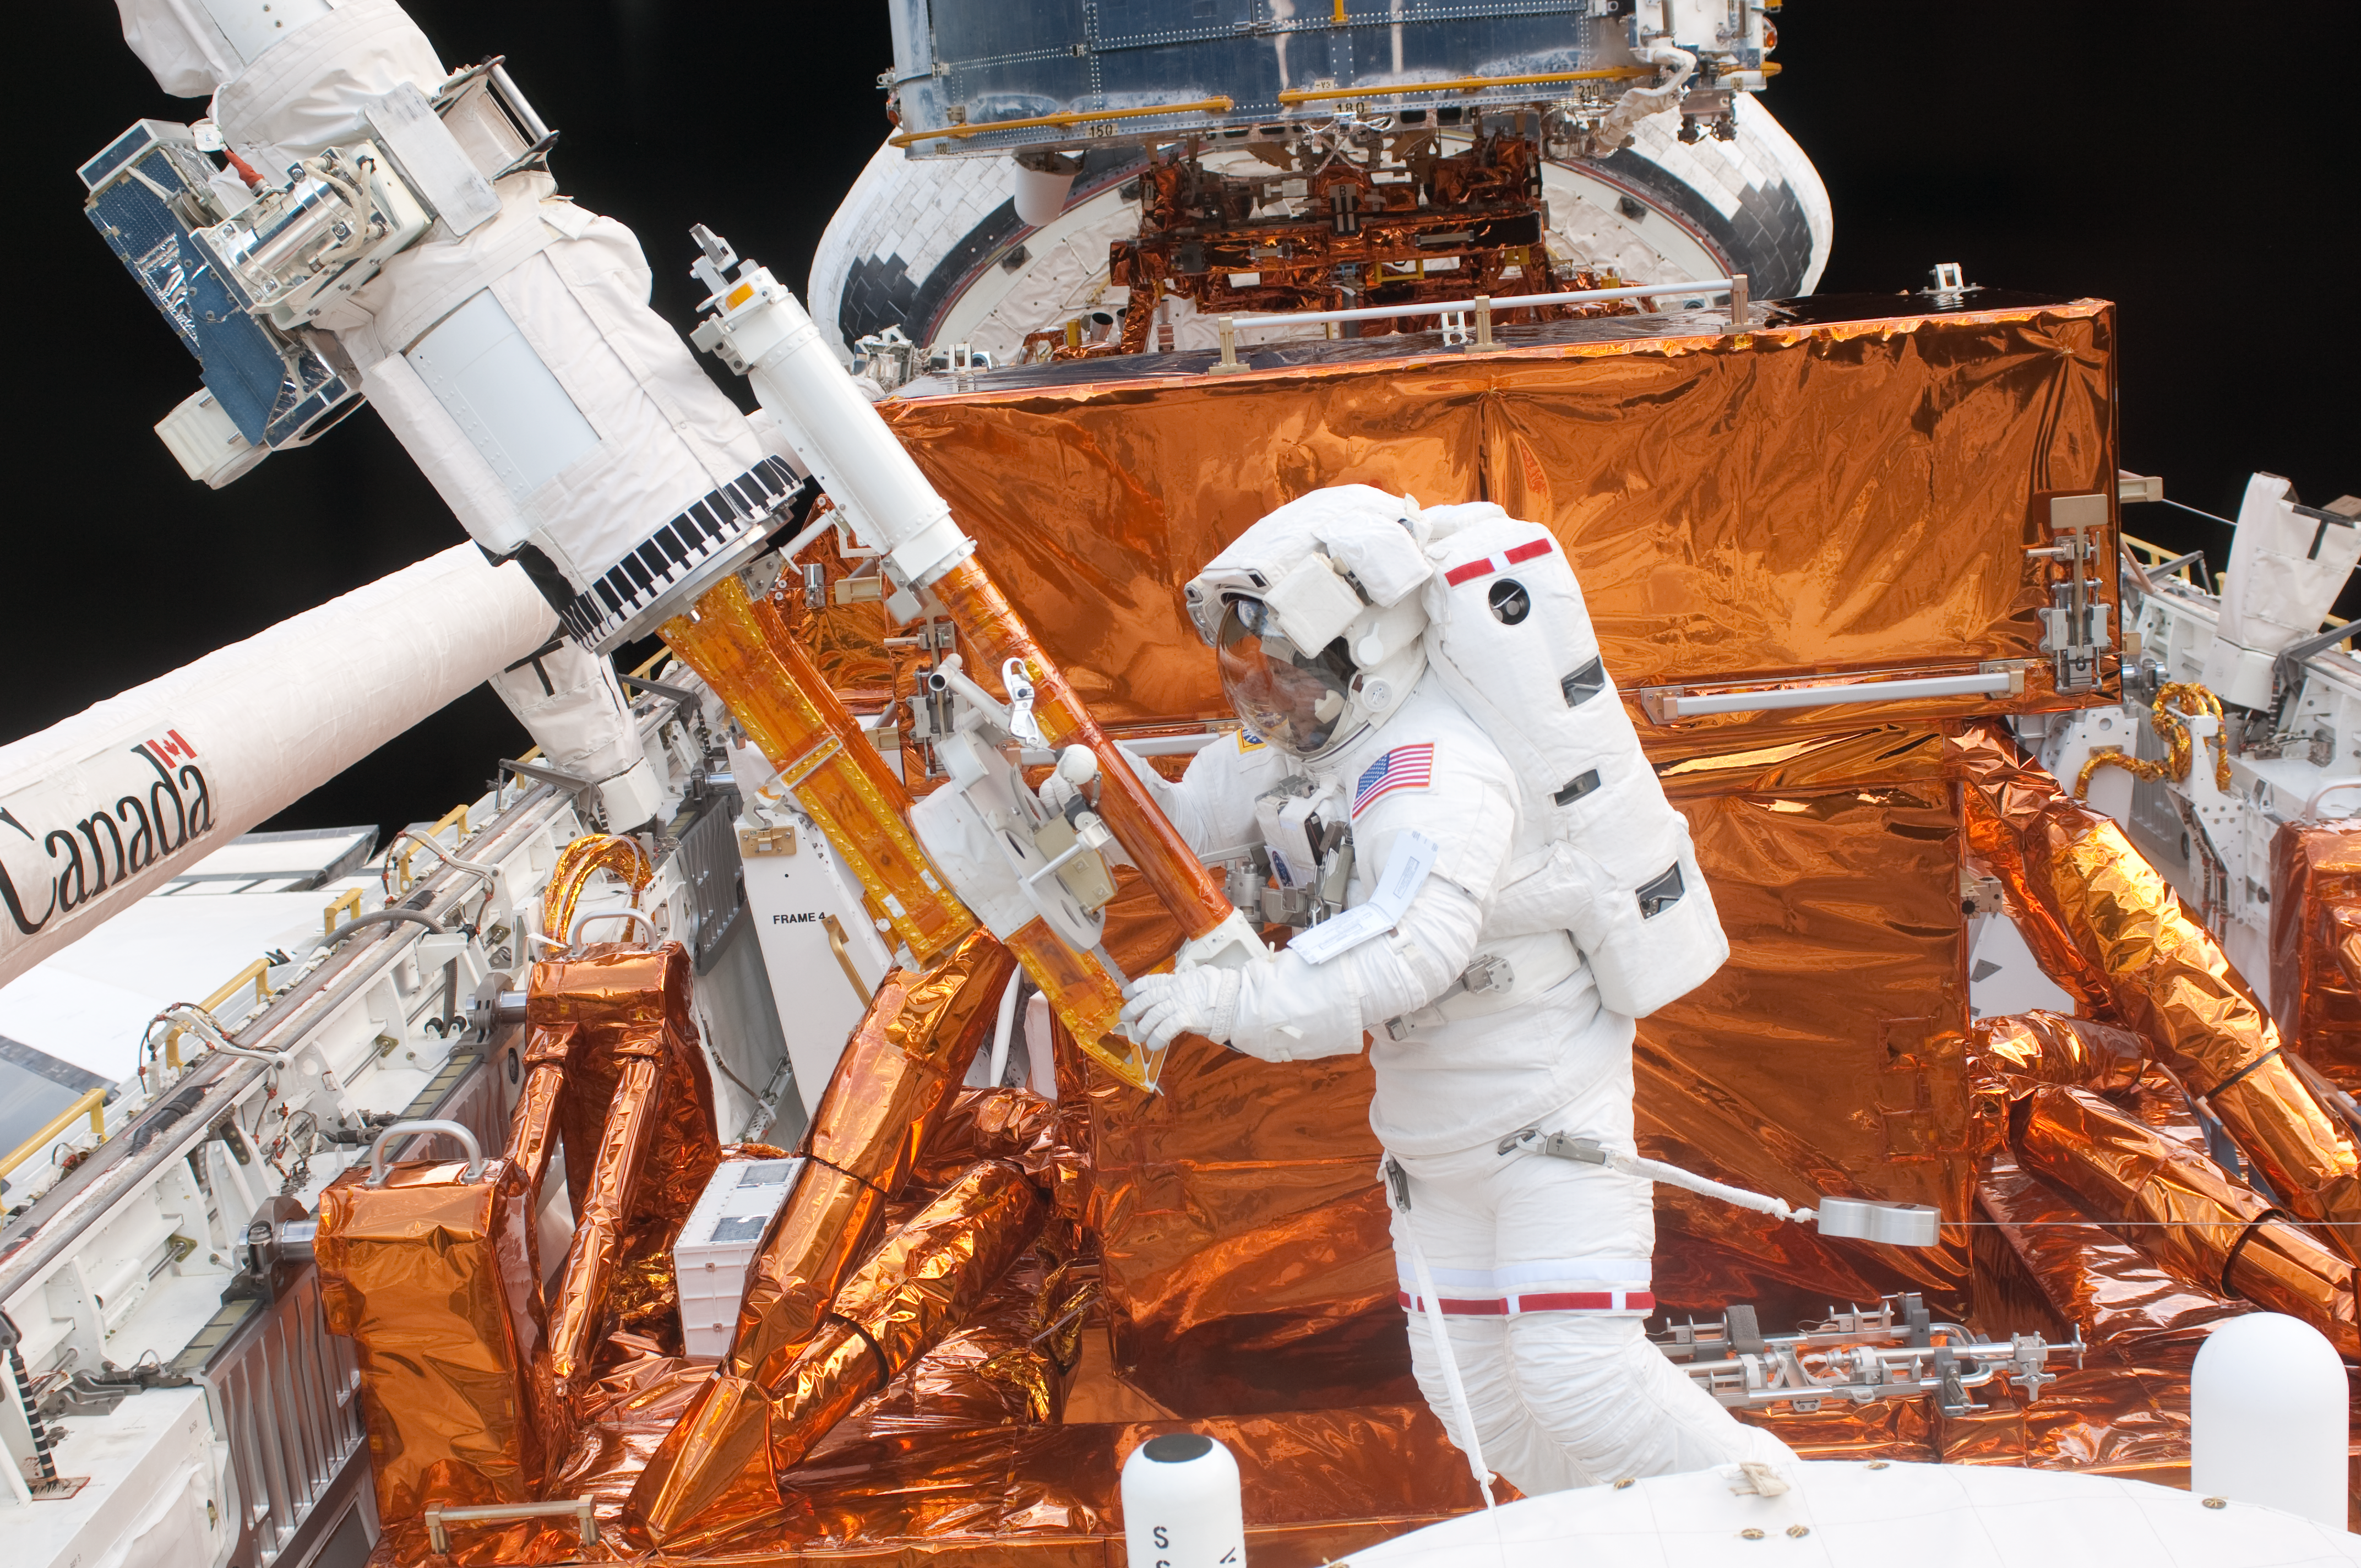 Massimino repairing the Hubble Space Telescope